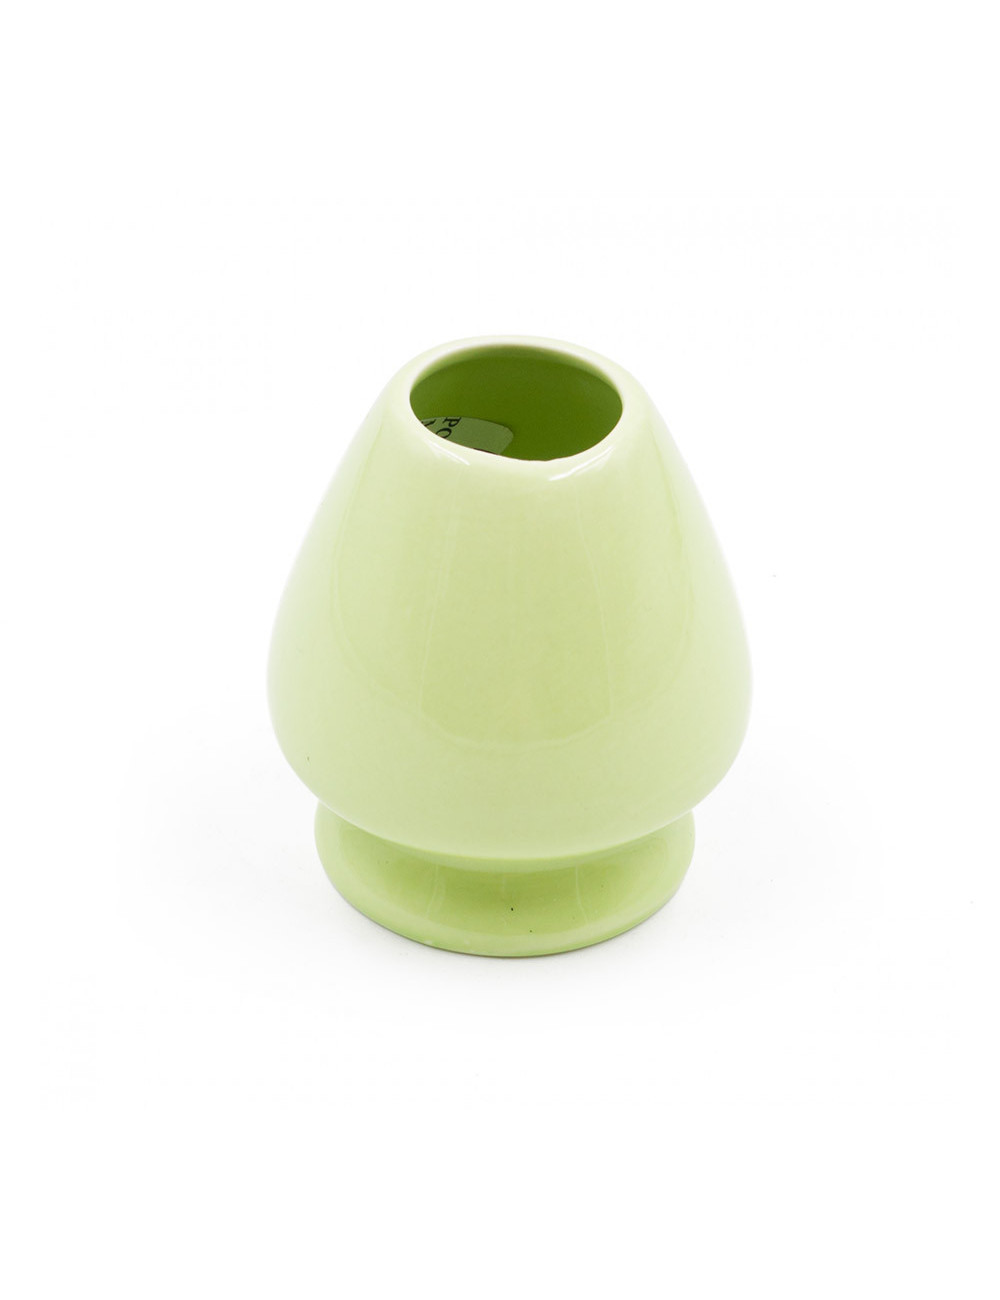 Portafrullino (Porta Chasen) verde in ceramica - La Pianta del Tè shop online